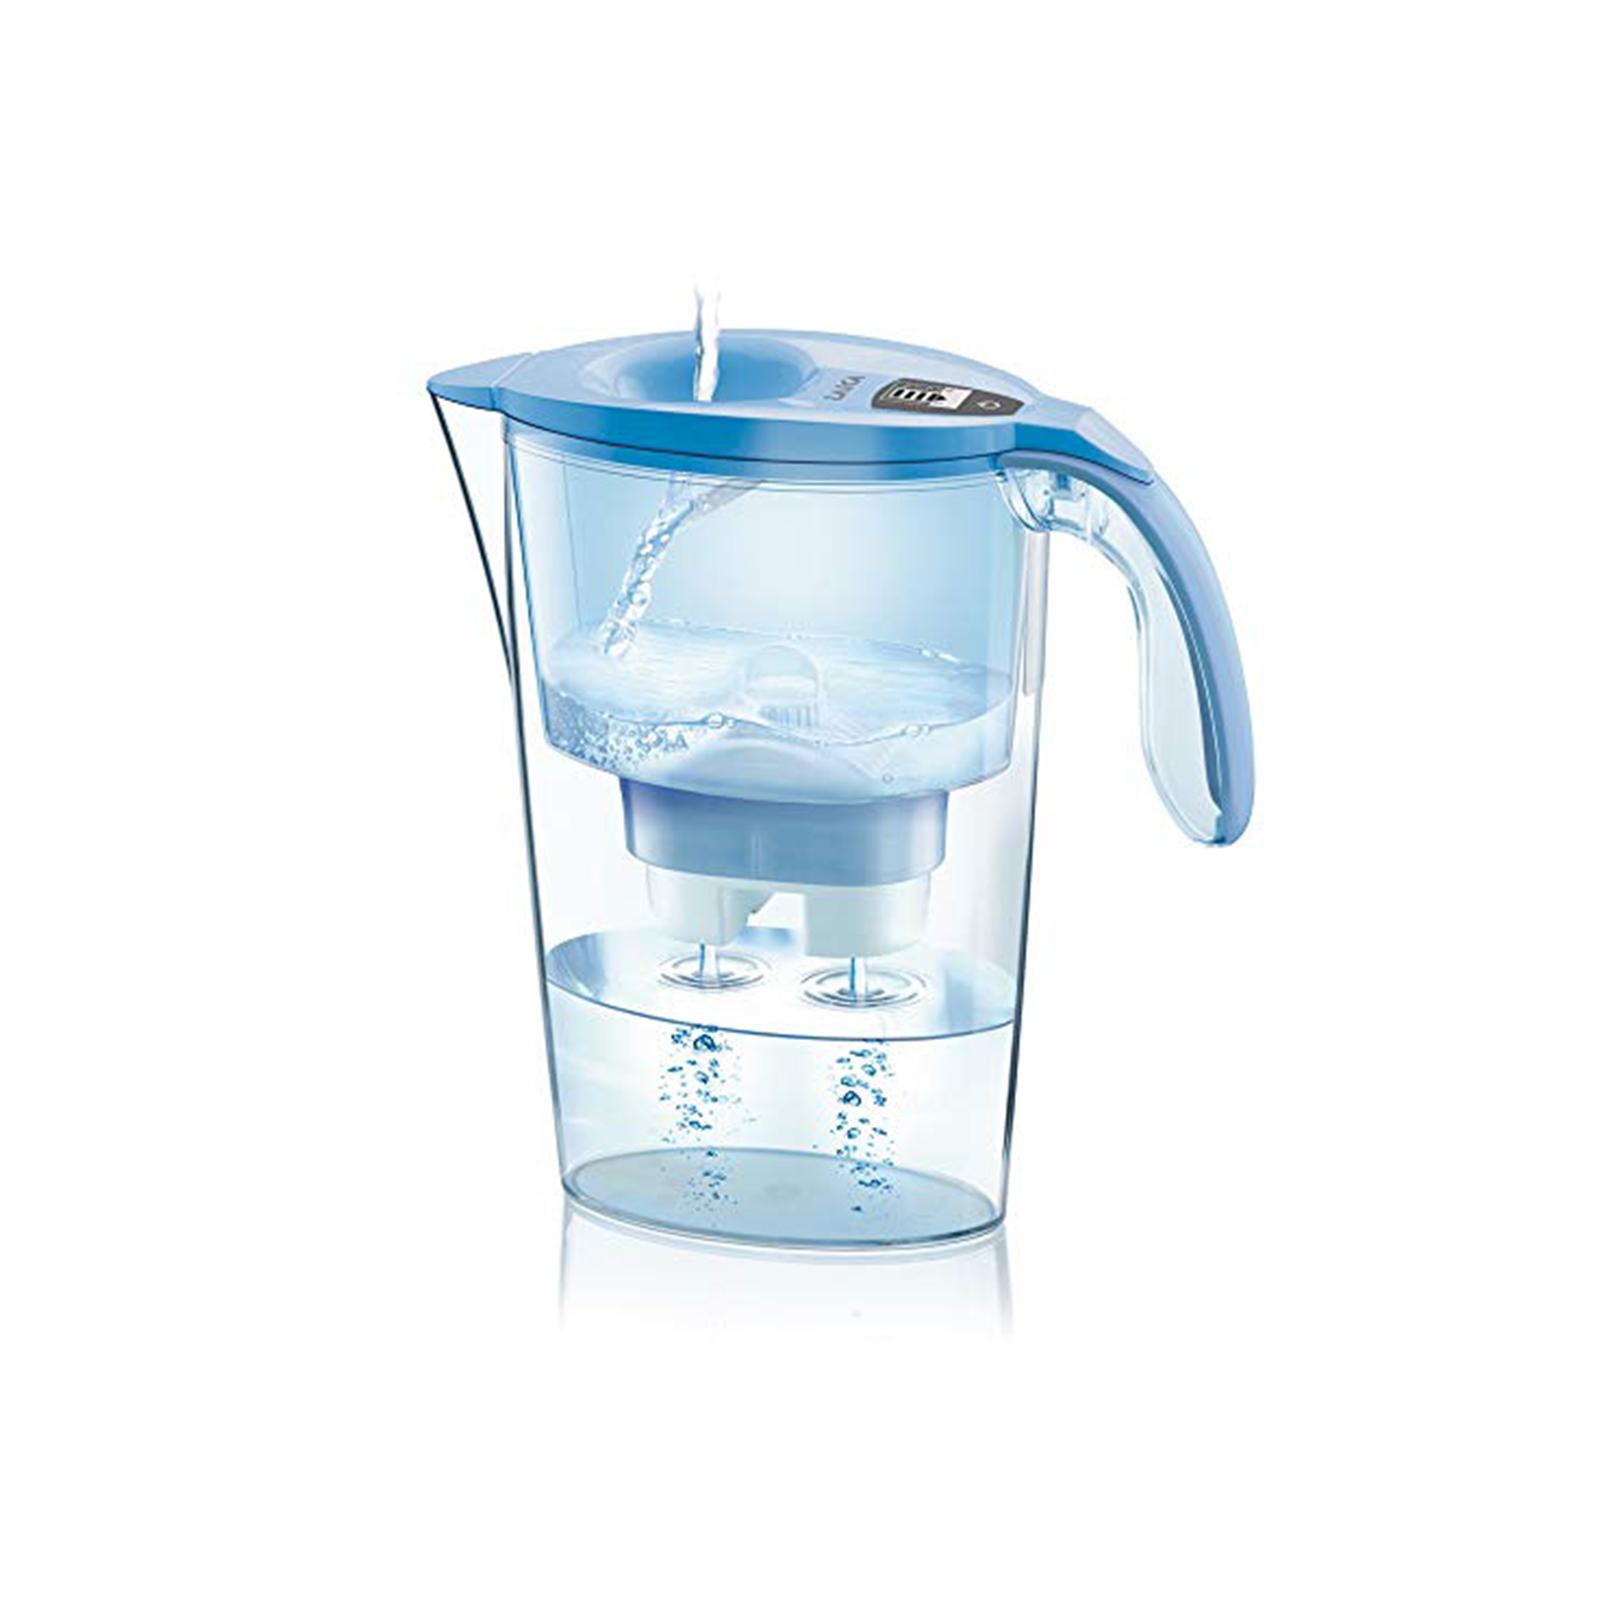 LAICA LA186 Water filter, Azul